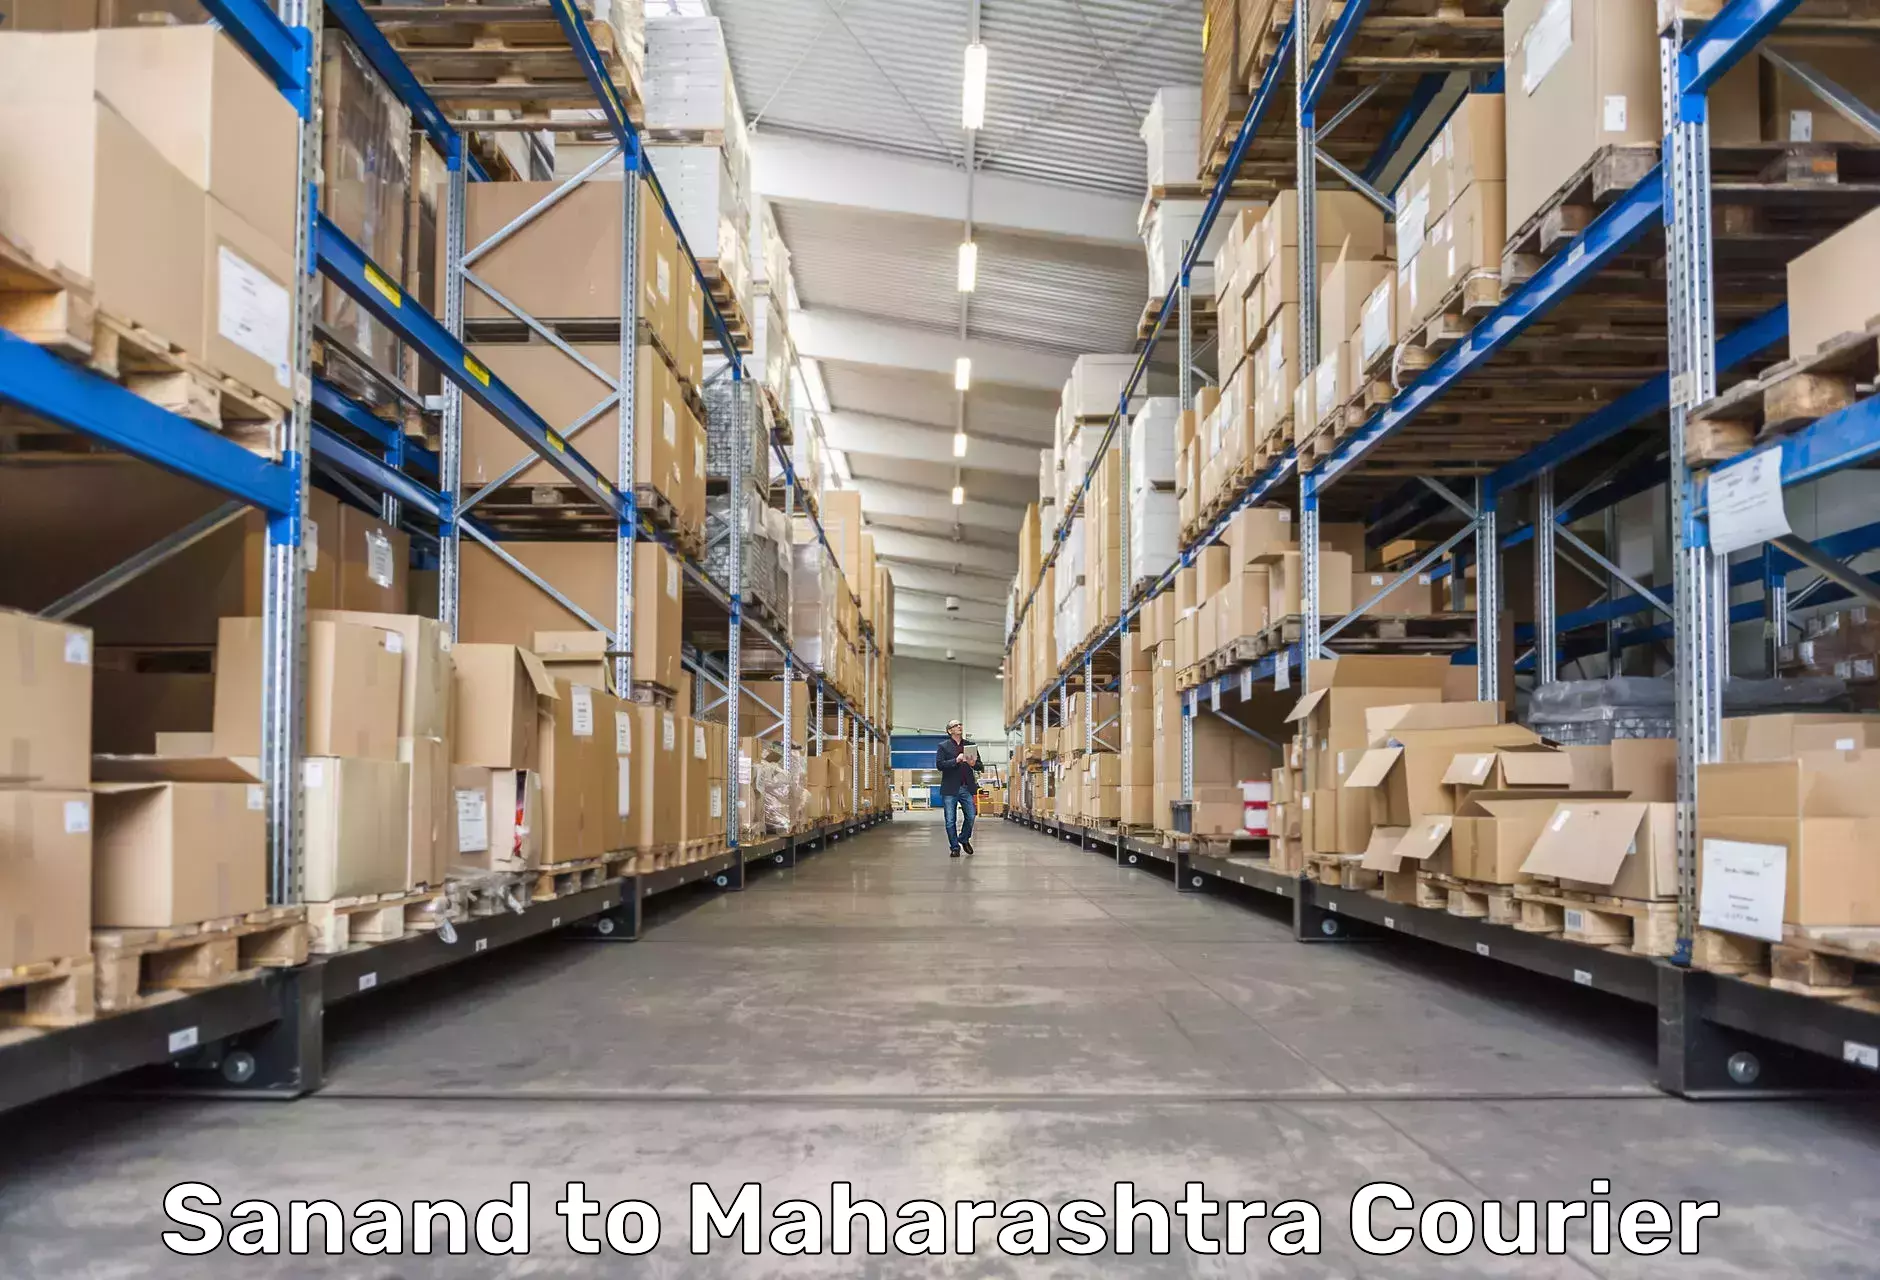 Express courier capabilities in Sanand to Maharashtra